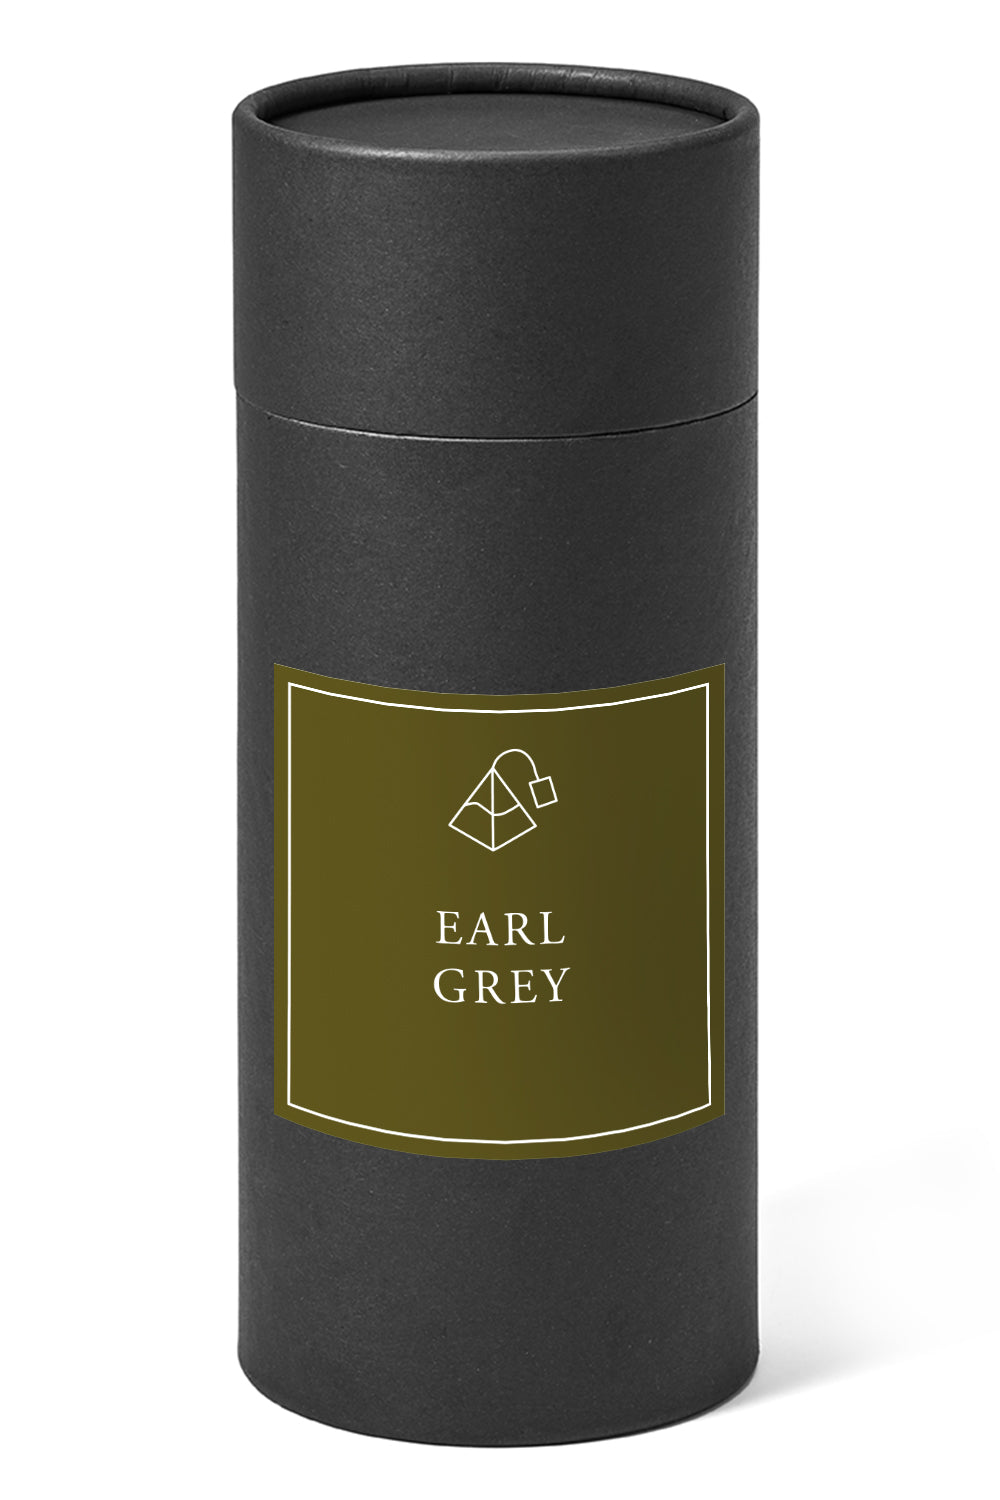 Earl Grey (Pyramid Bags)-40 pyramids gift-Loose Leaf Tea-High Teas